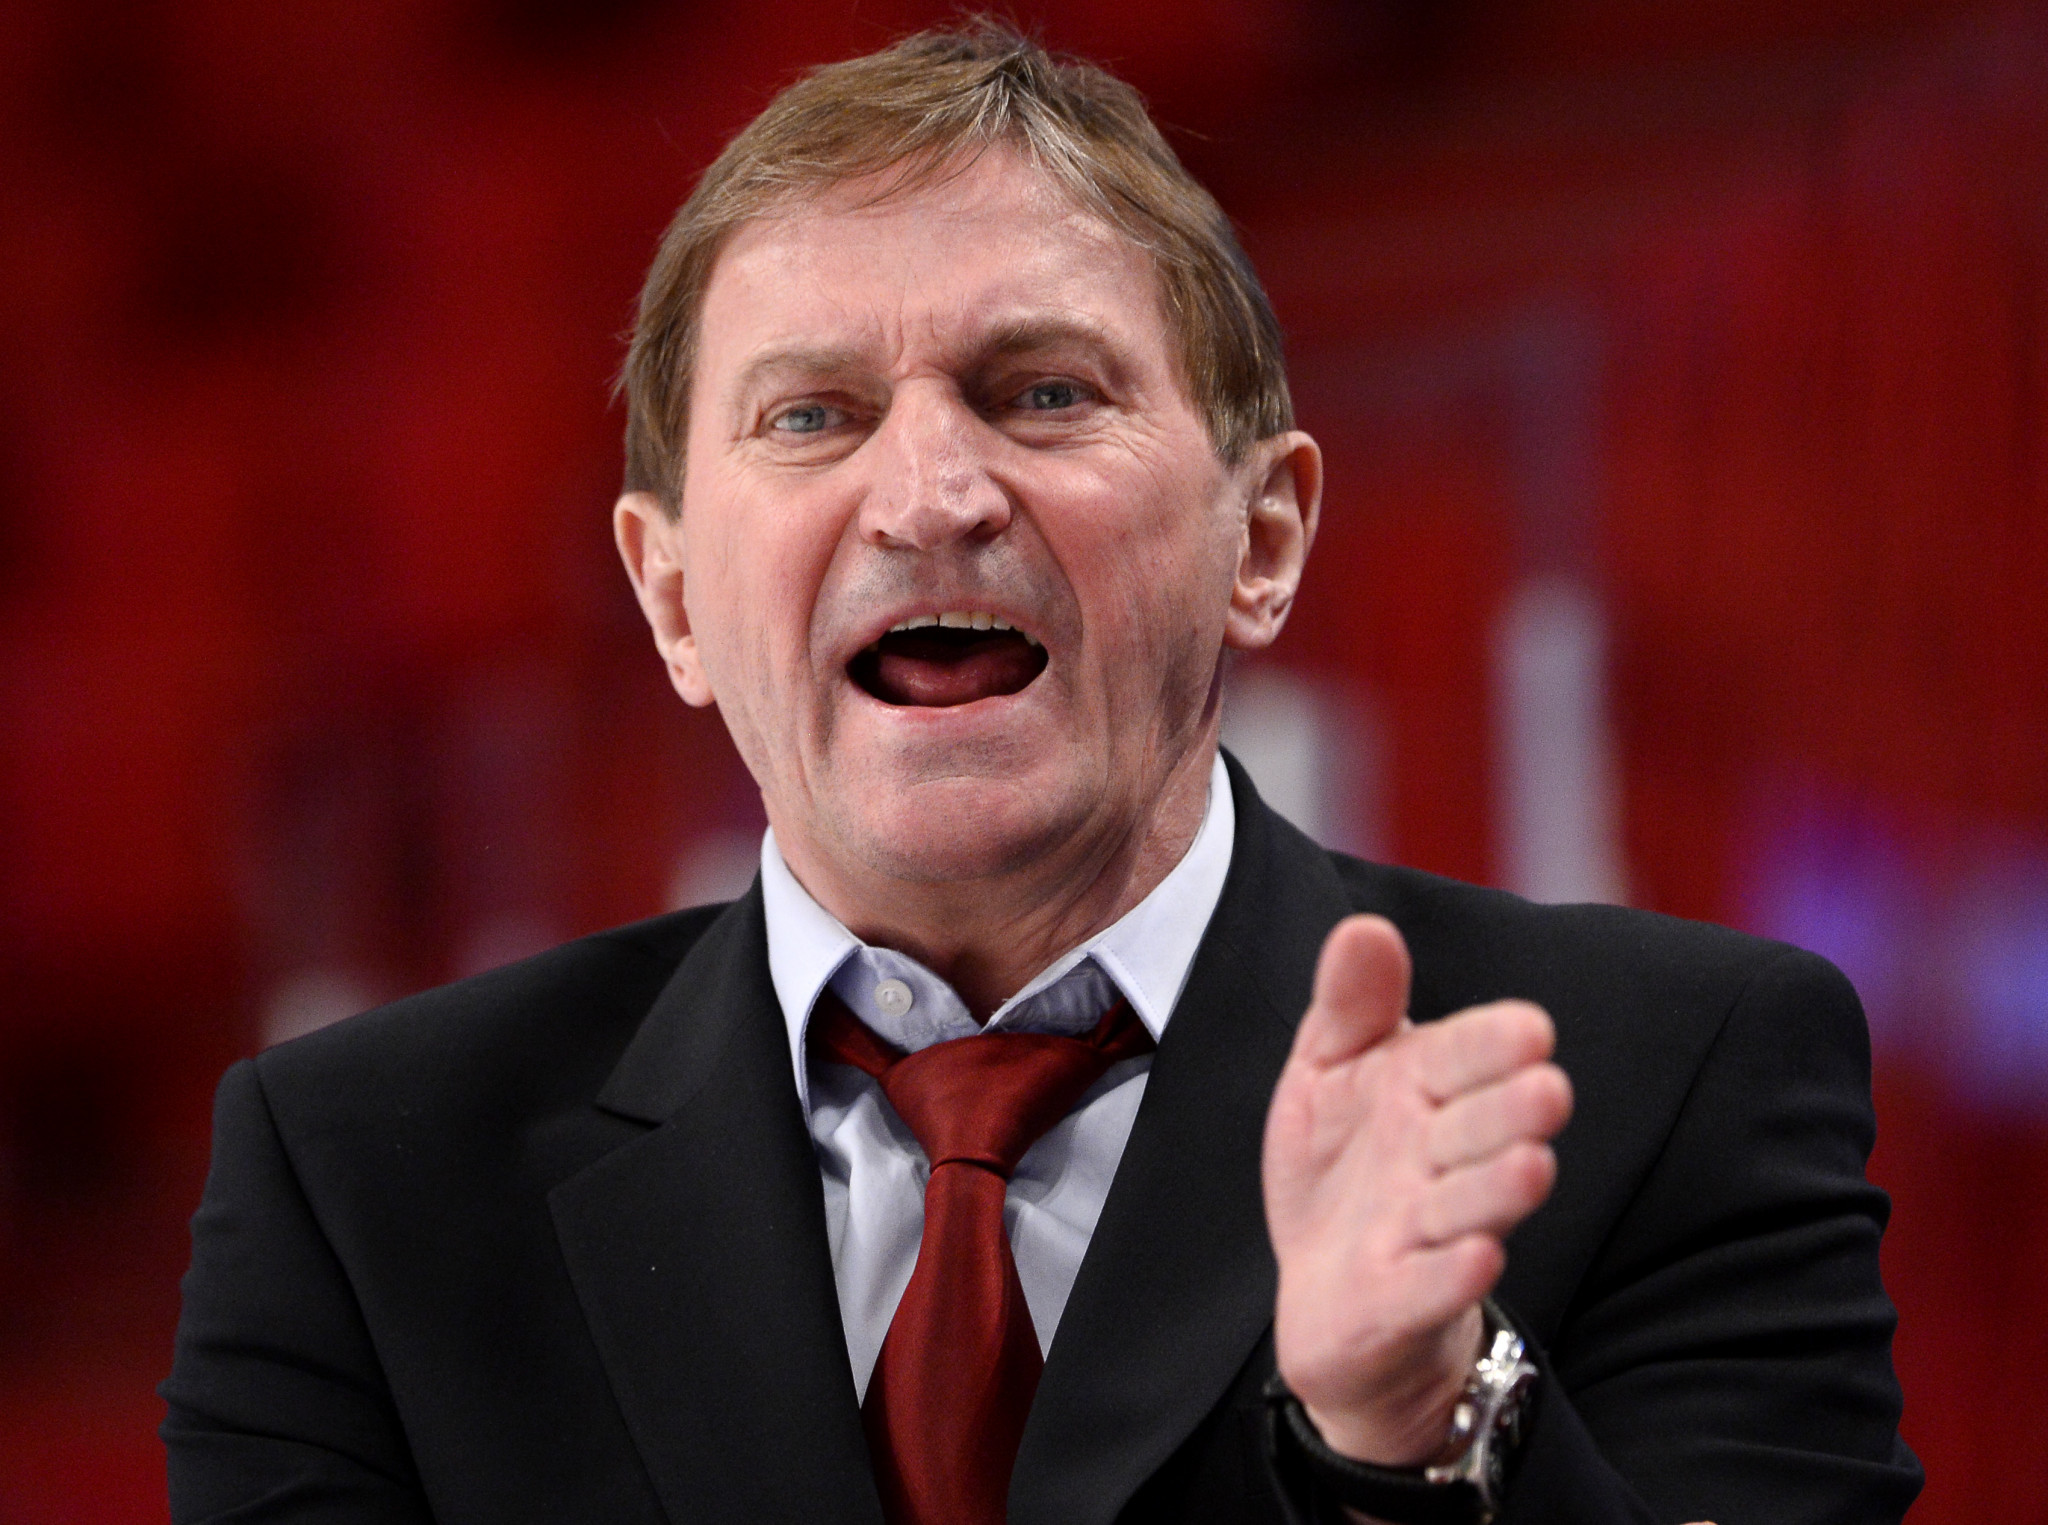 Hadamczik elected Czech Ice Hockey Association President